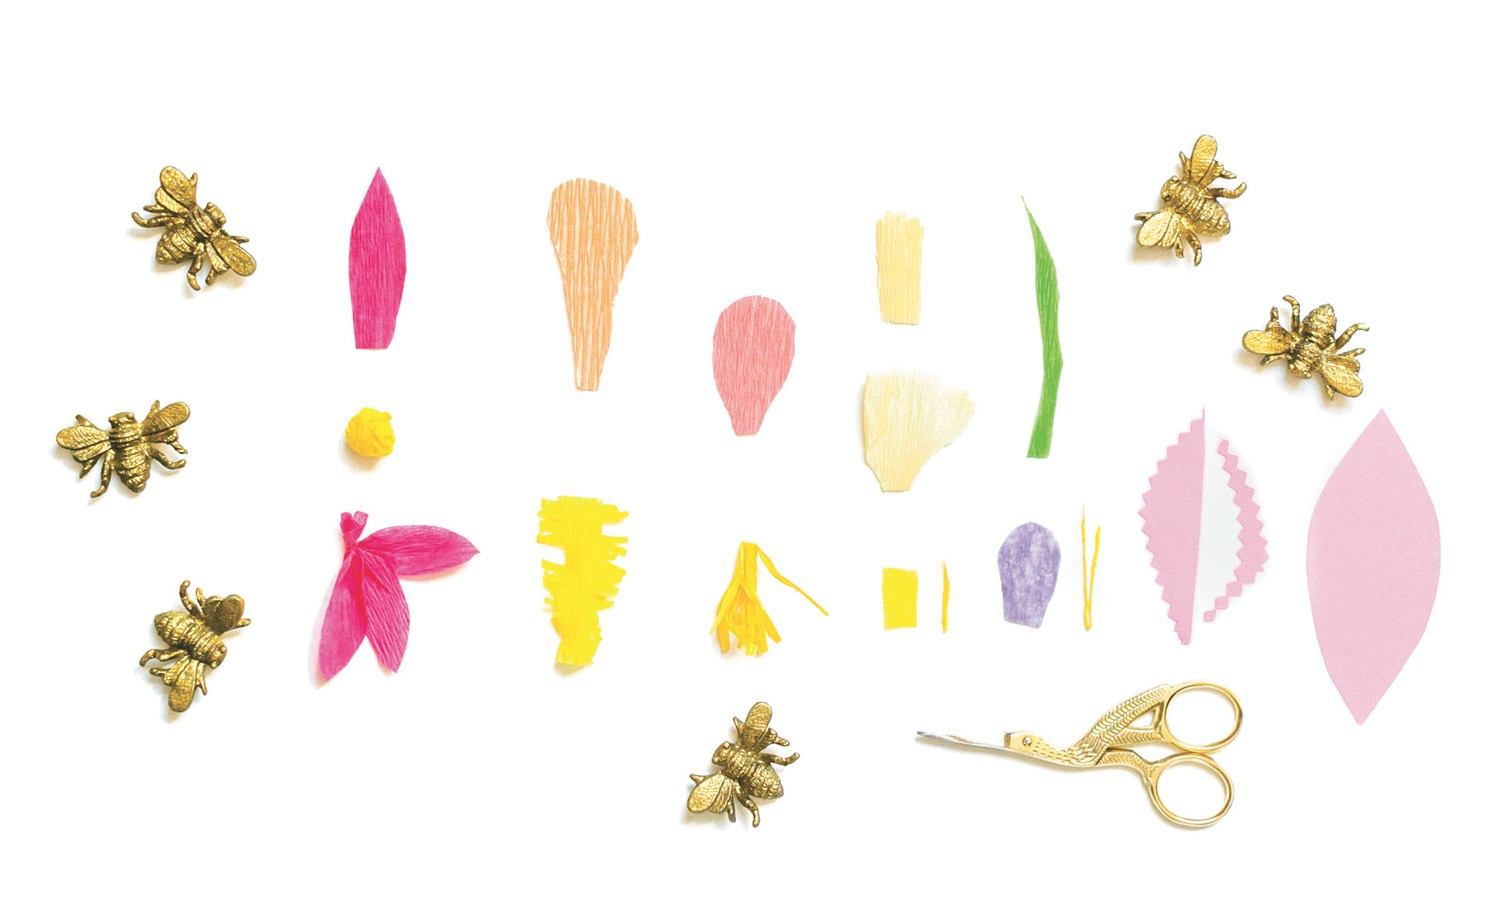 Single stalk bouquets for gifting? Yes please!! #paperflowers  #crepepaperflowers #handmadegifts